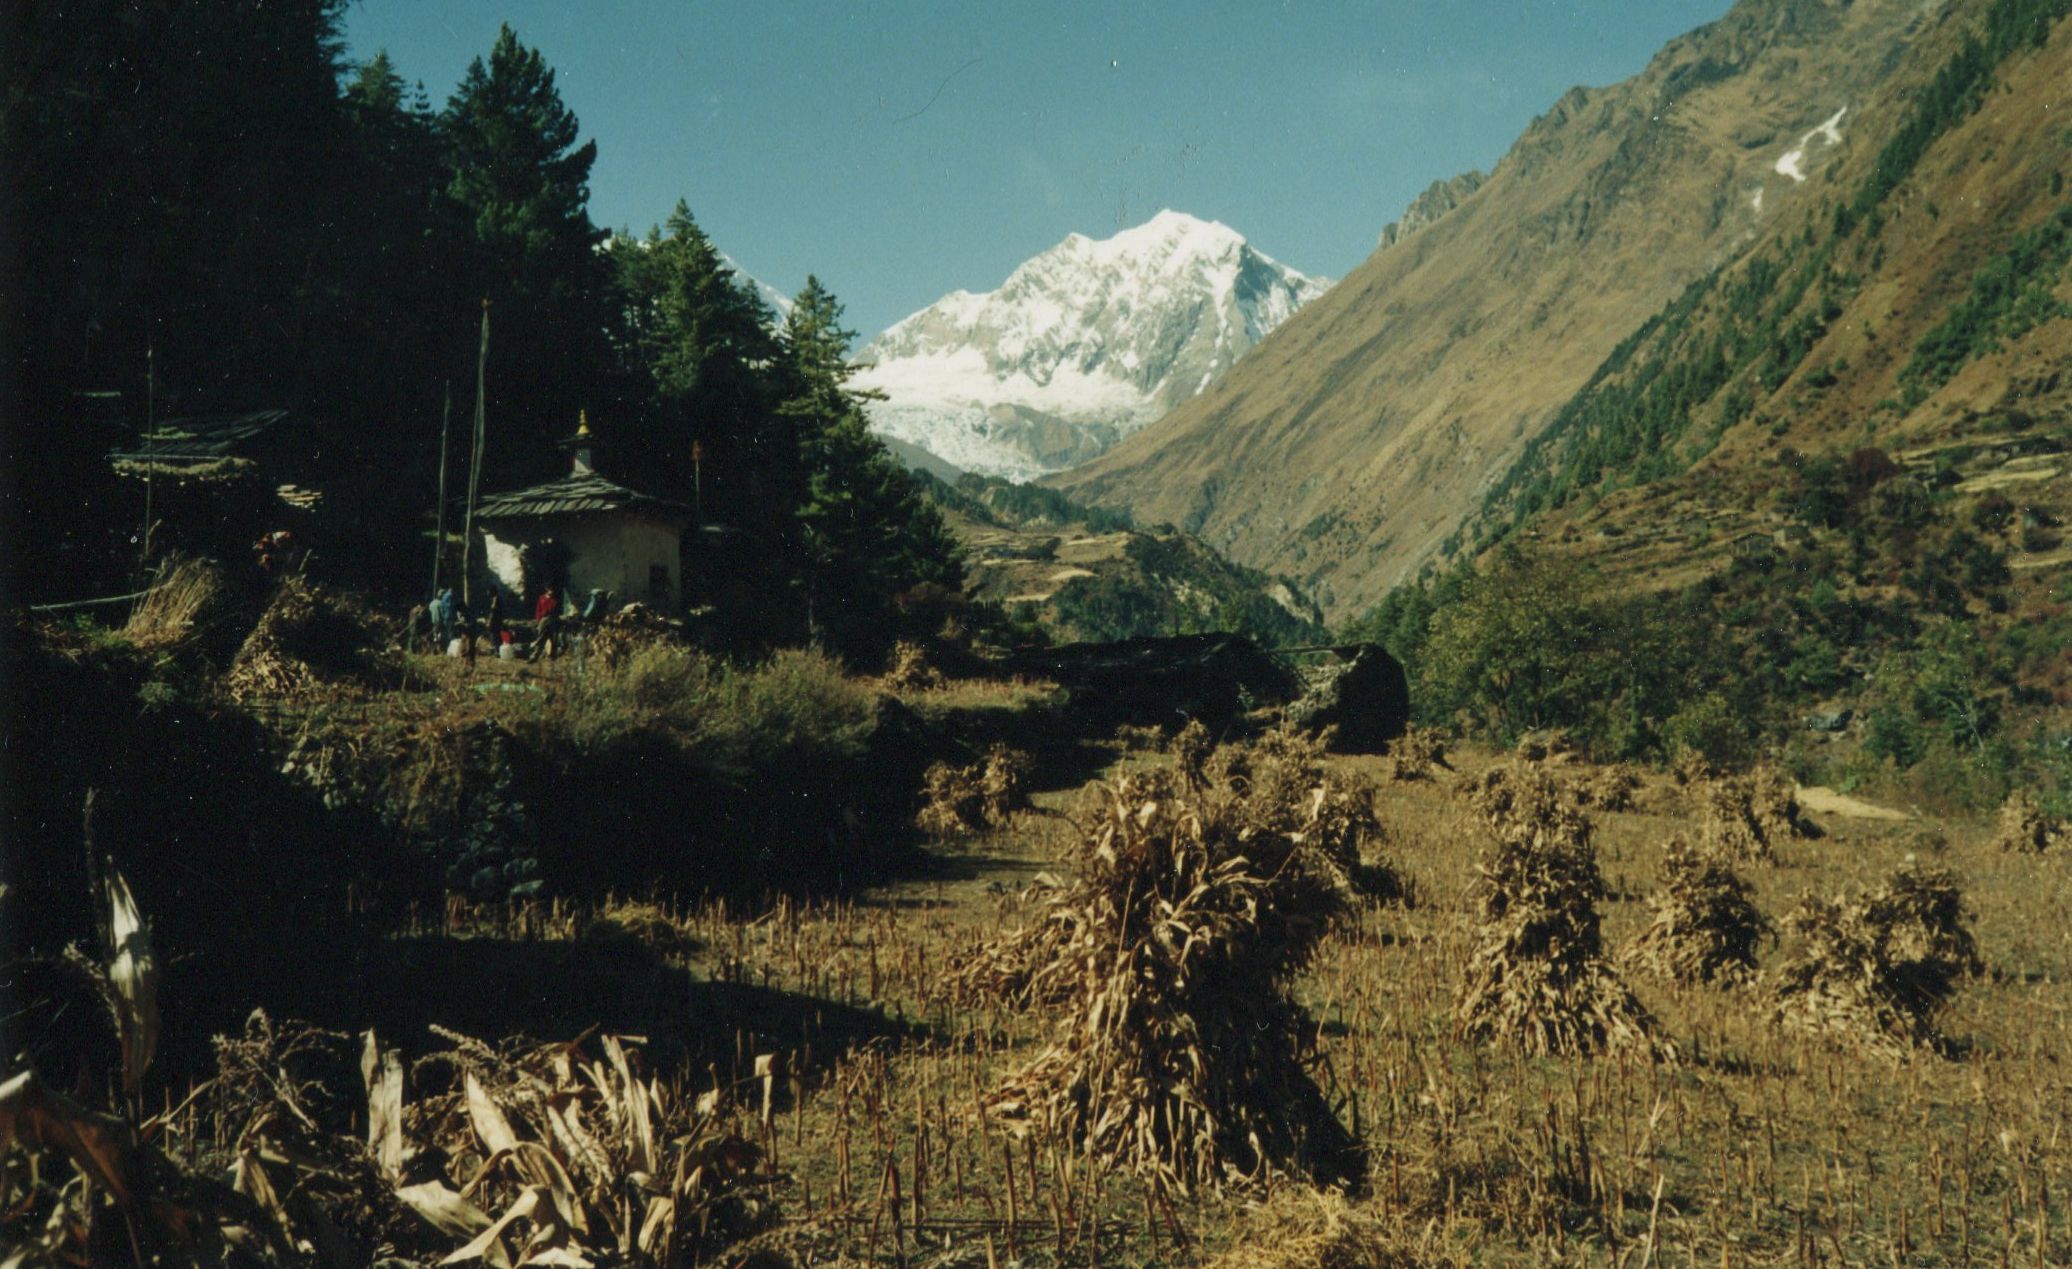 Manaslu Himal from the Buri Gandaki Valley on route from Ngyak to Samagaon